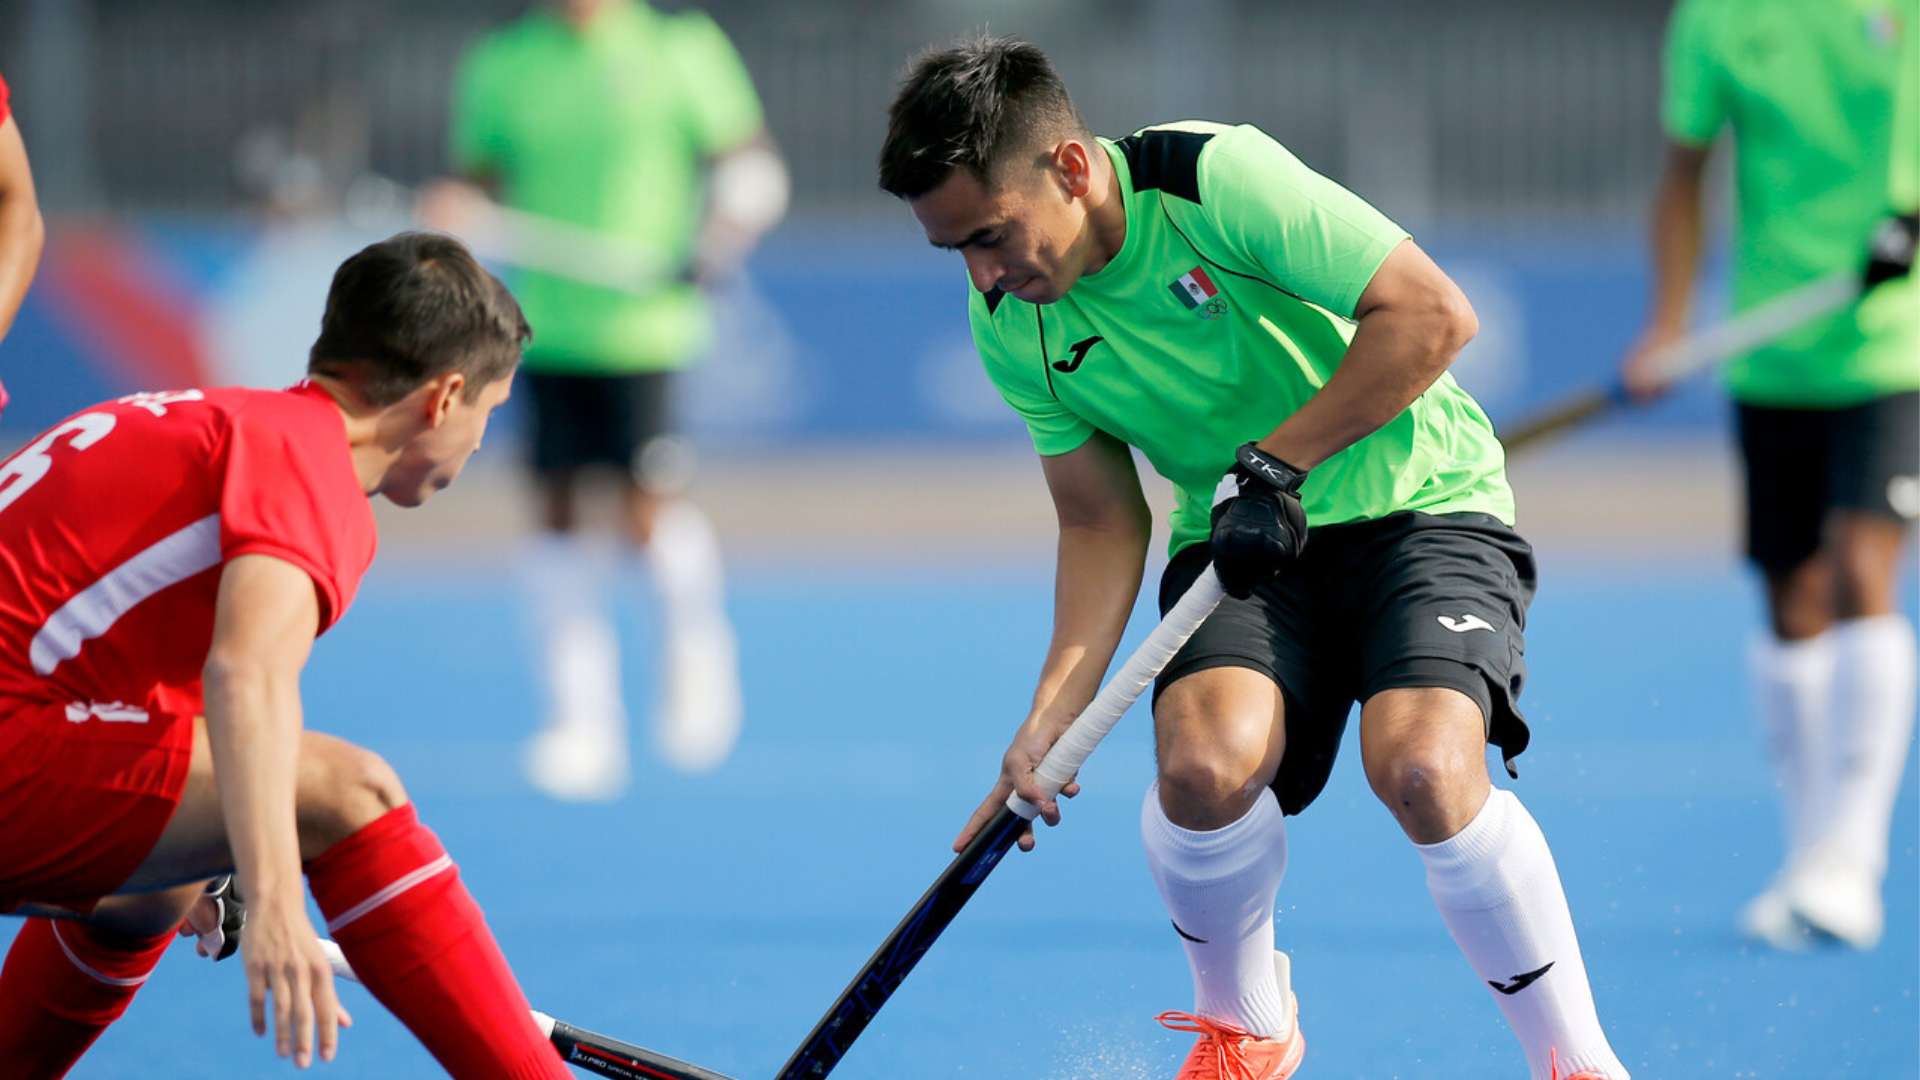 Mexico easily defeats Peru in field hockey